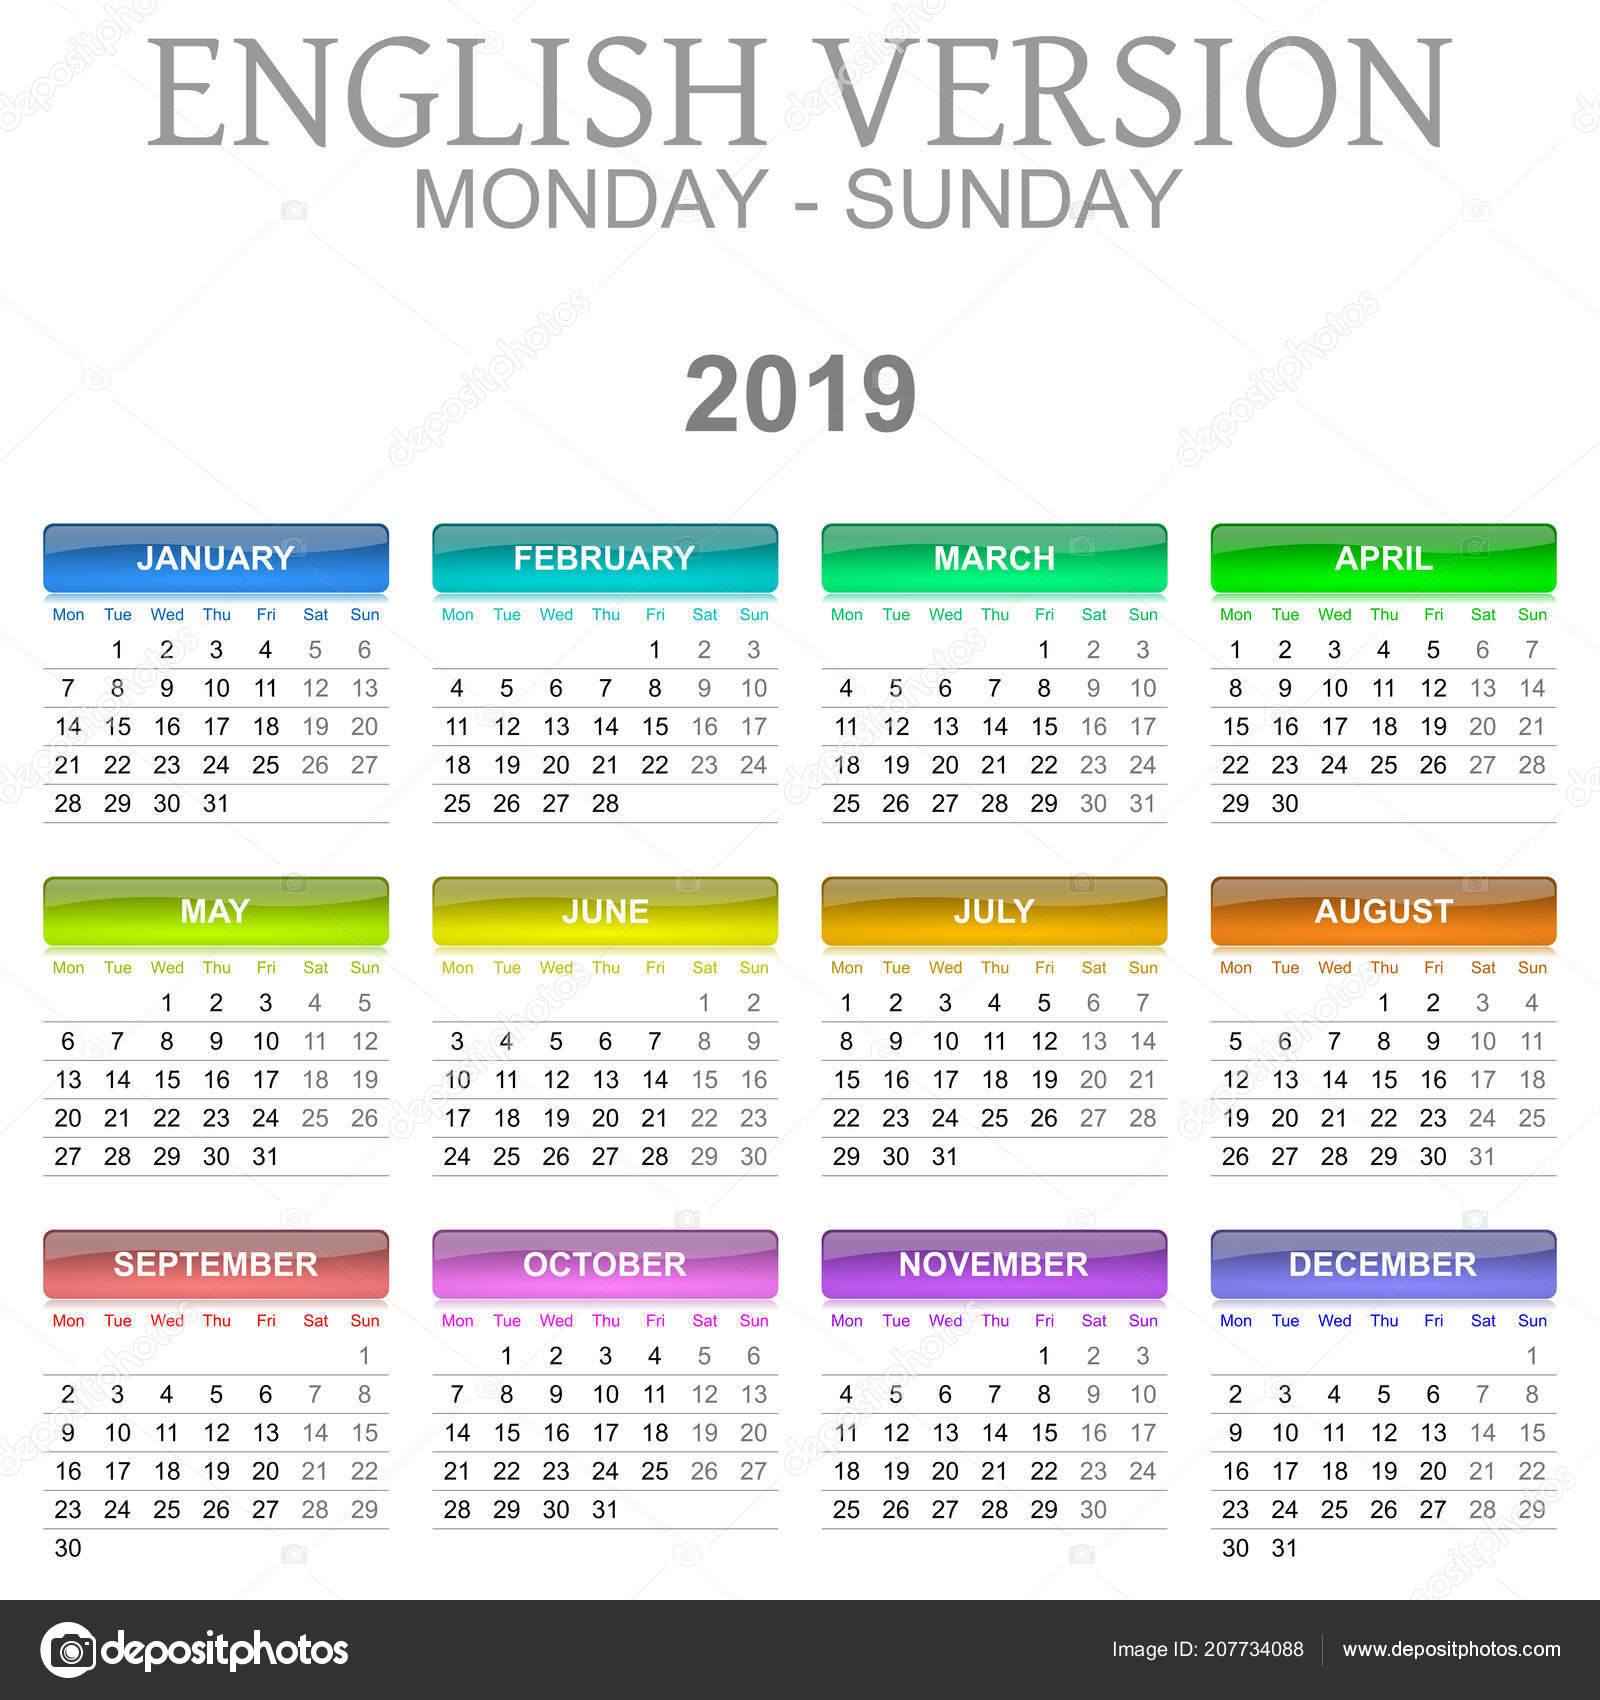 colorful-monday-sunday-2019-calendar-english-language-version